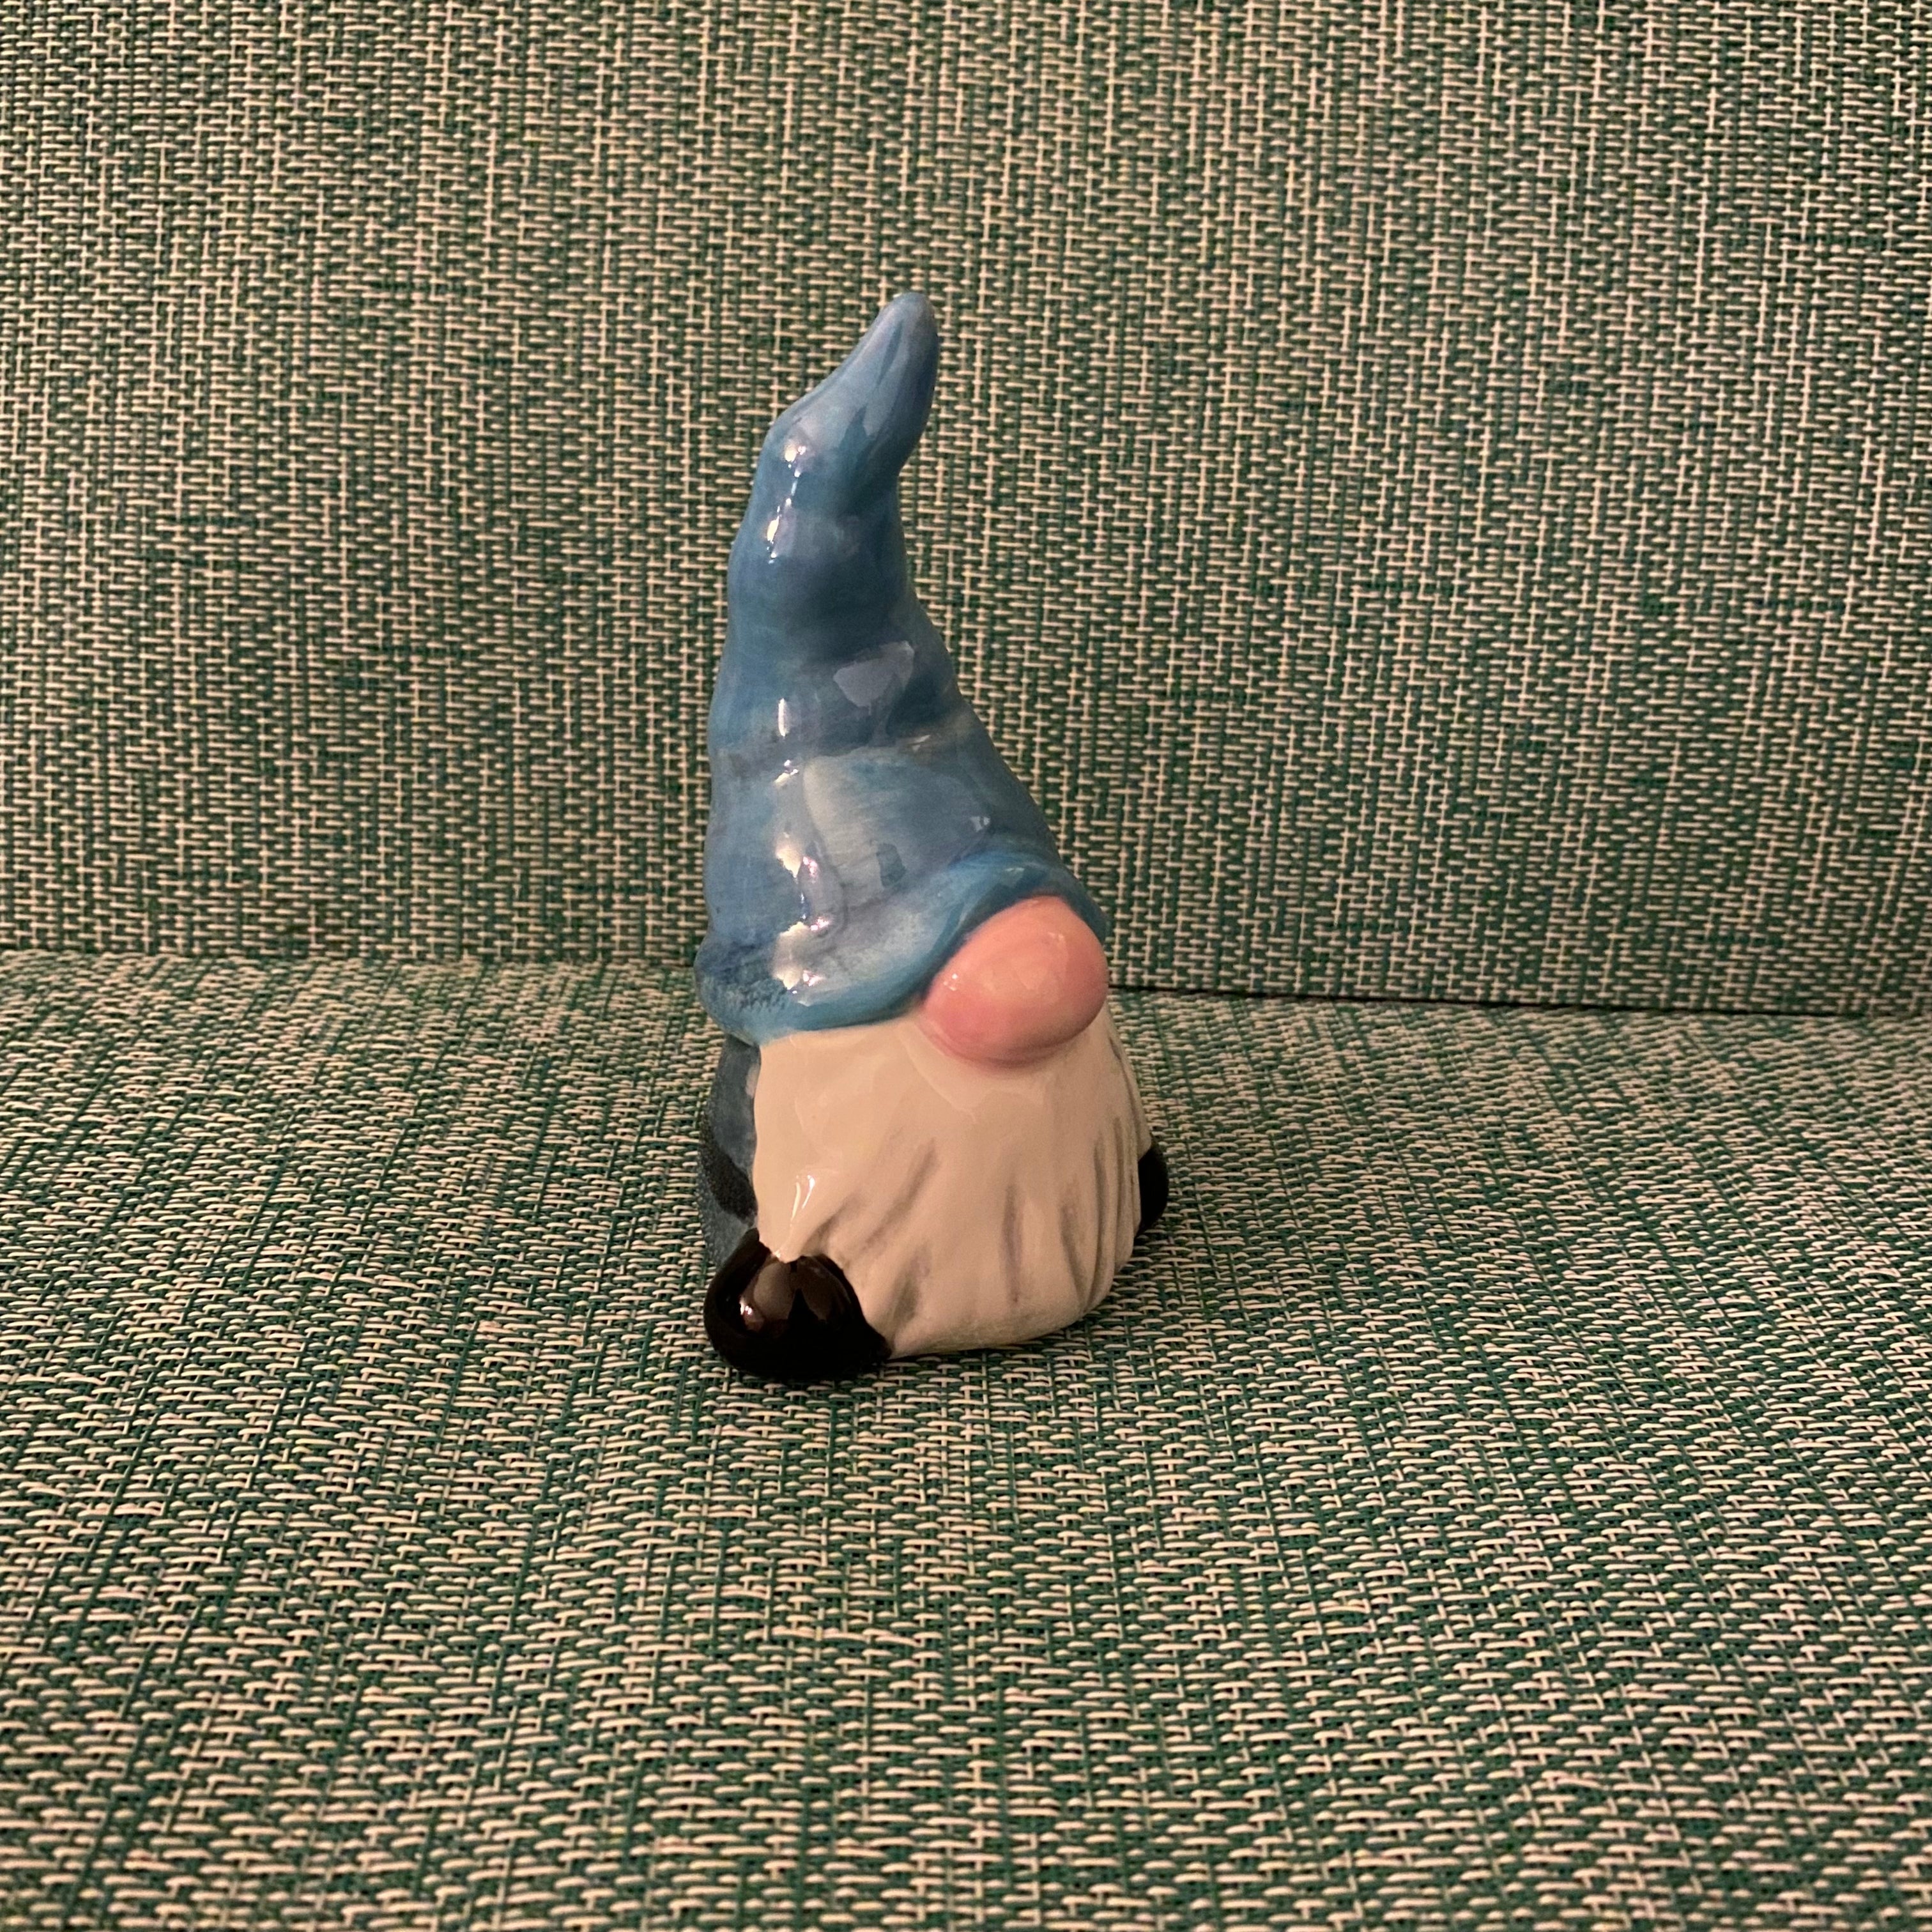 Small Gnome - PaintPott